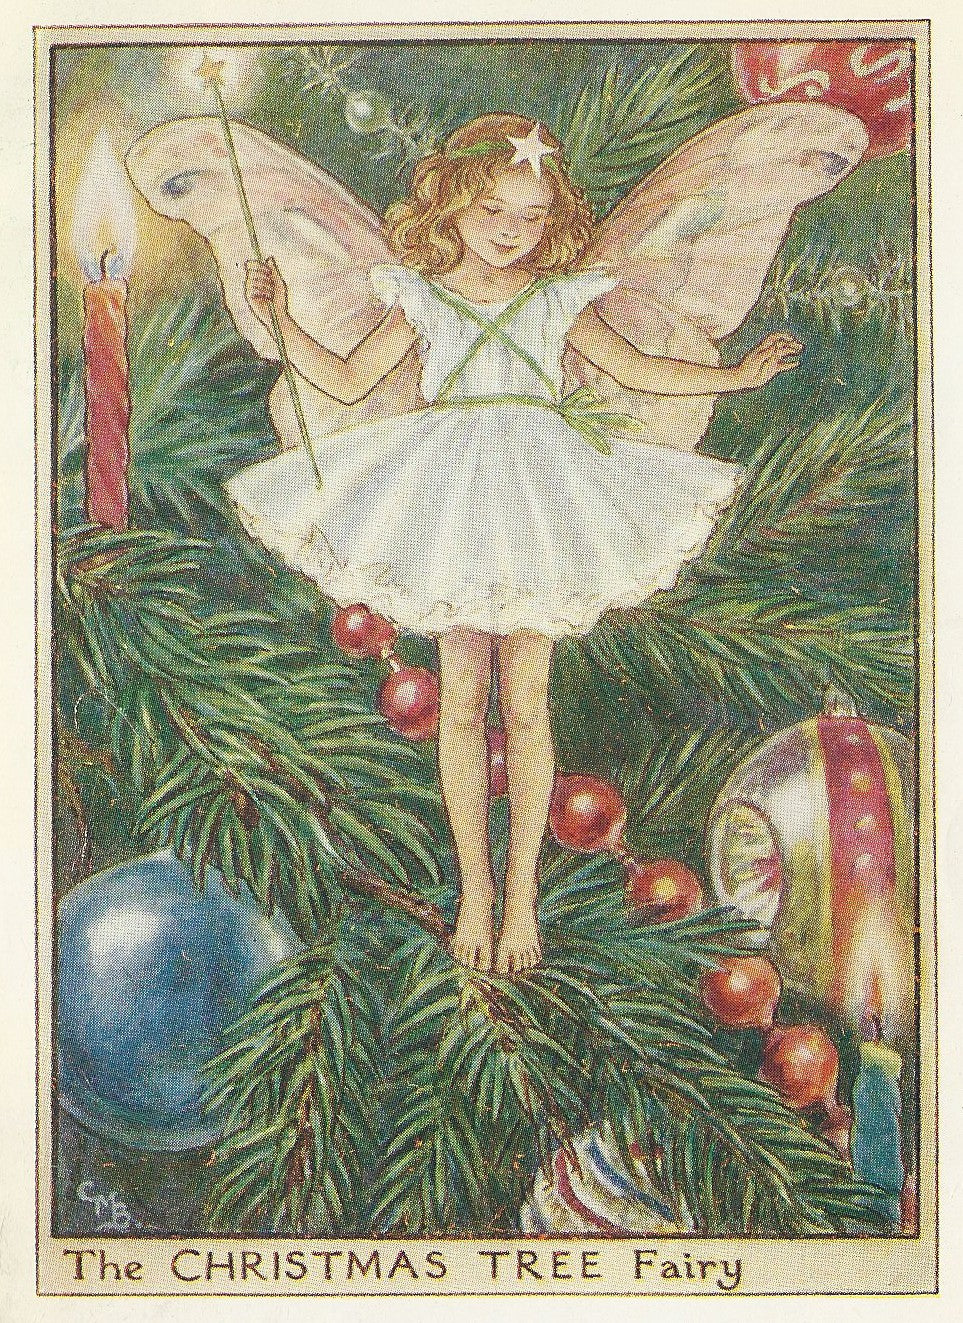 Christmas Tree Flower Fairy guaranteed original vintage print